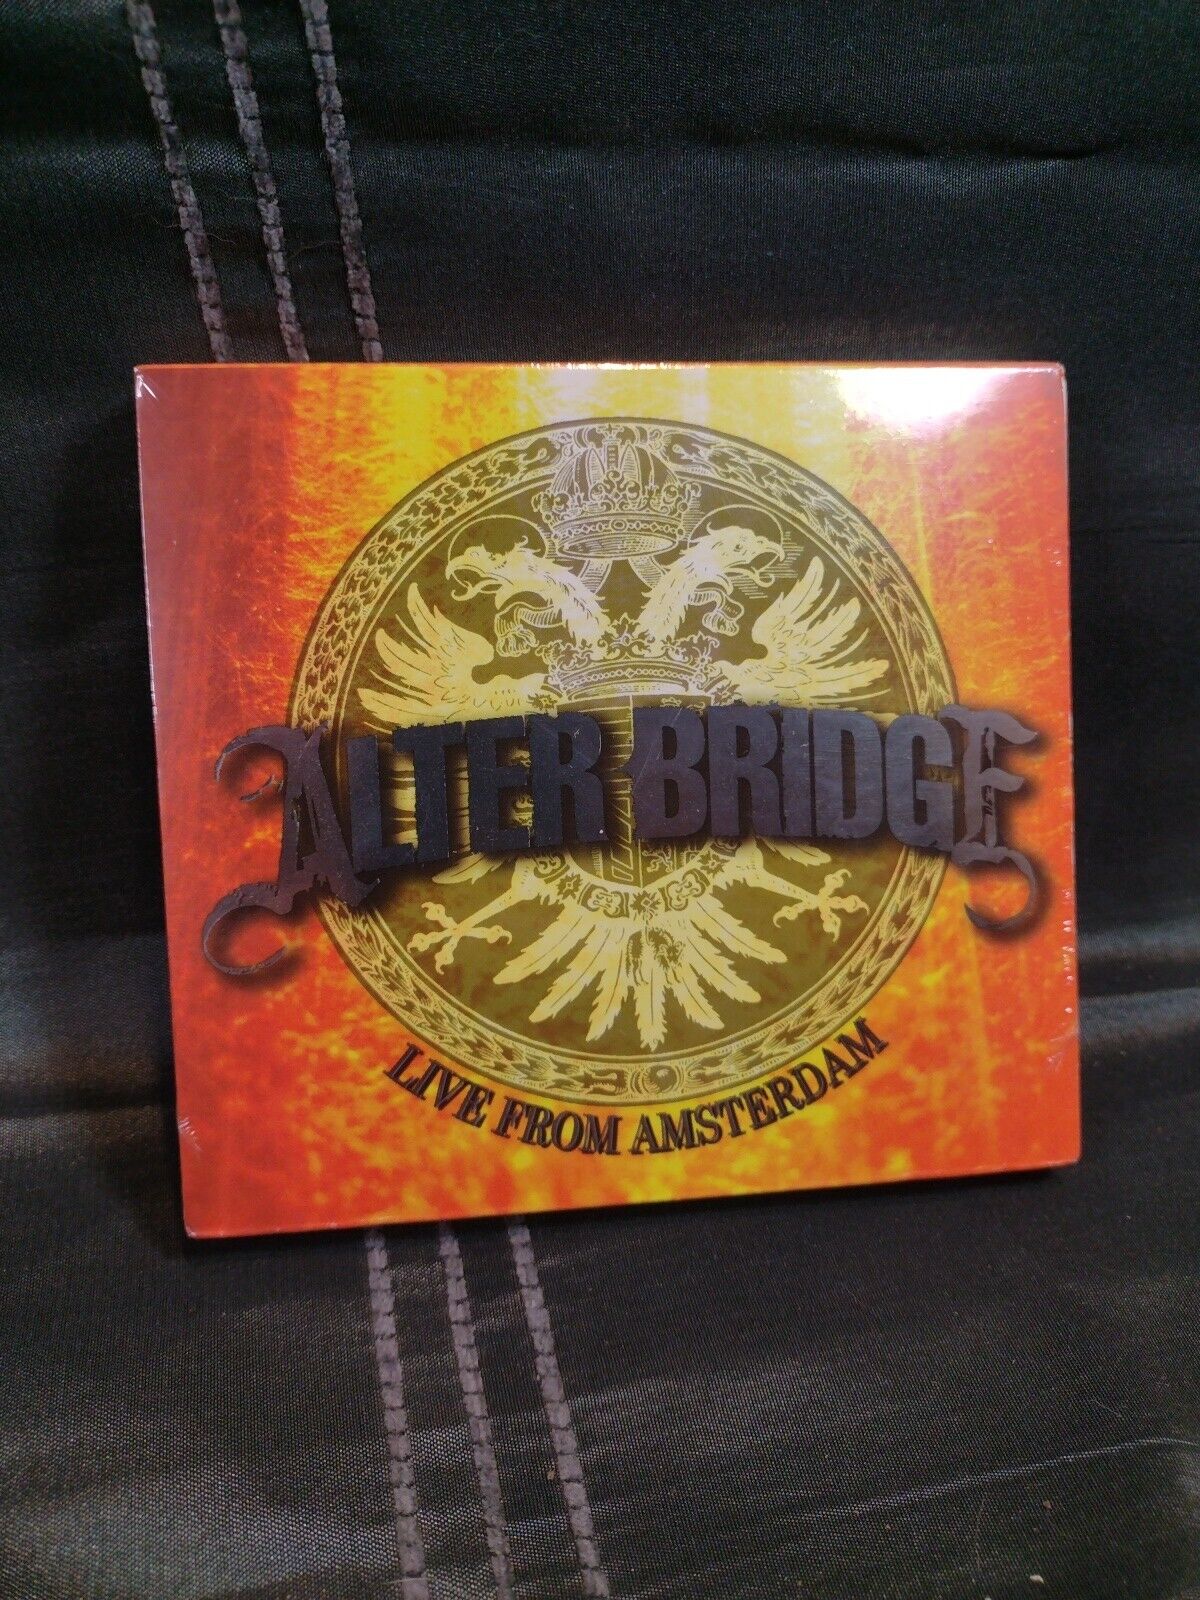 Alter Bridge – Live From Amsterdam CD/DVD New/Sealed  